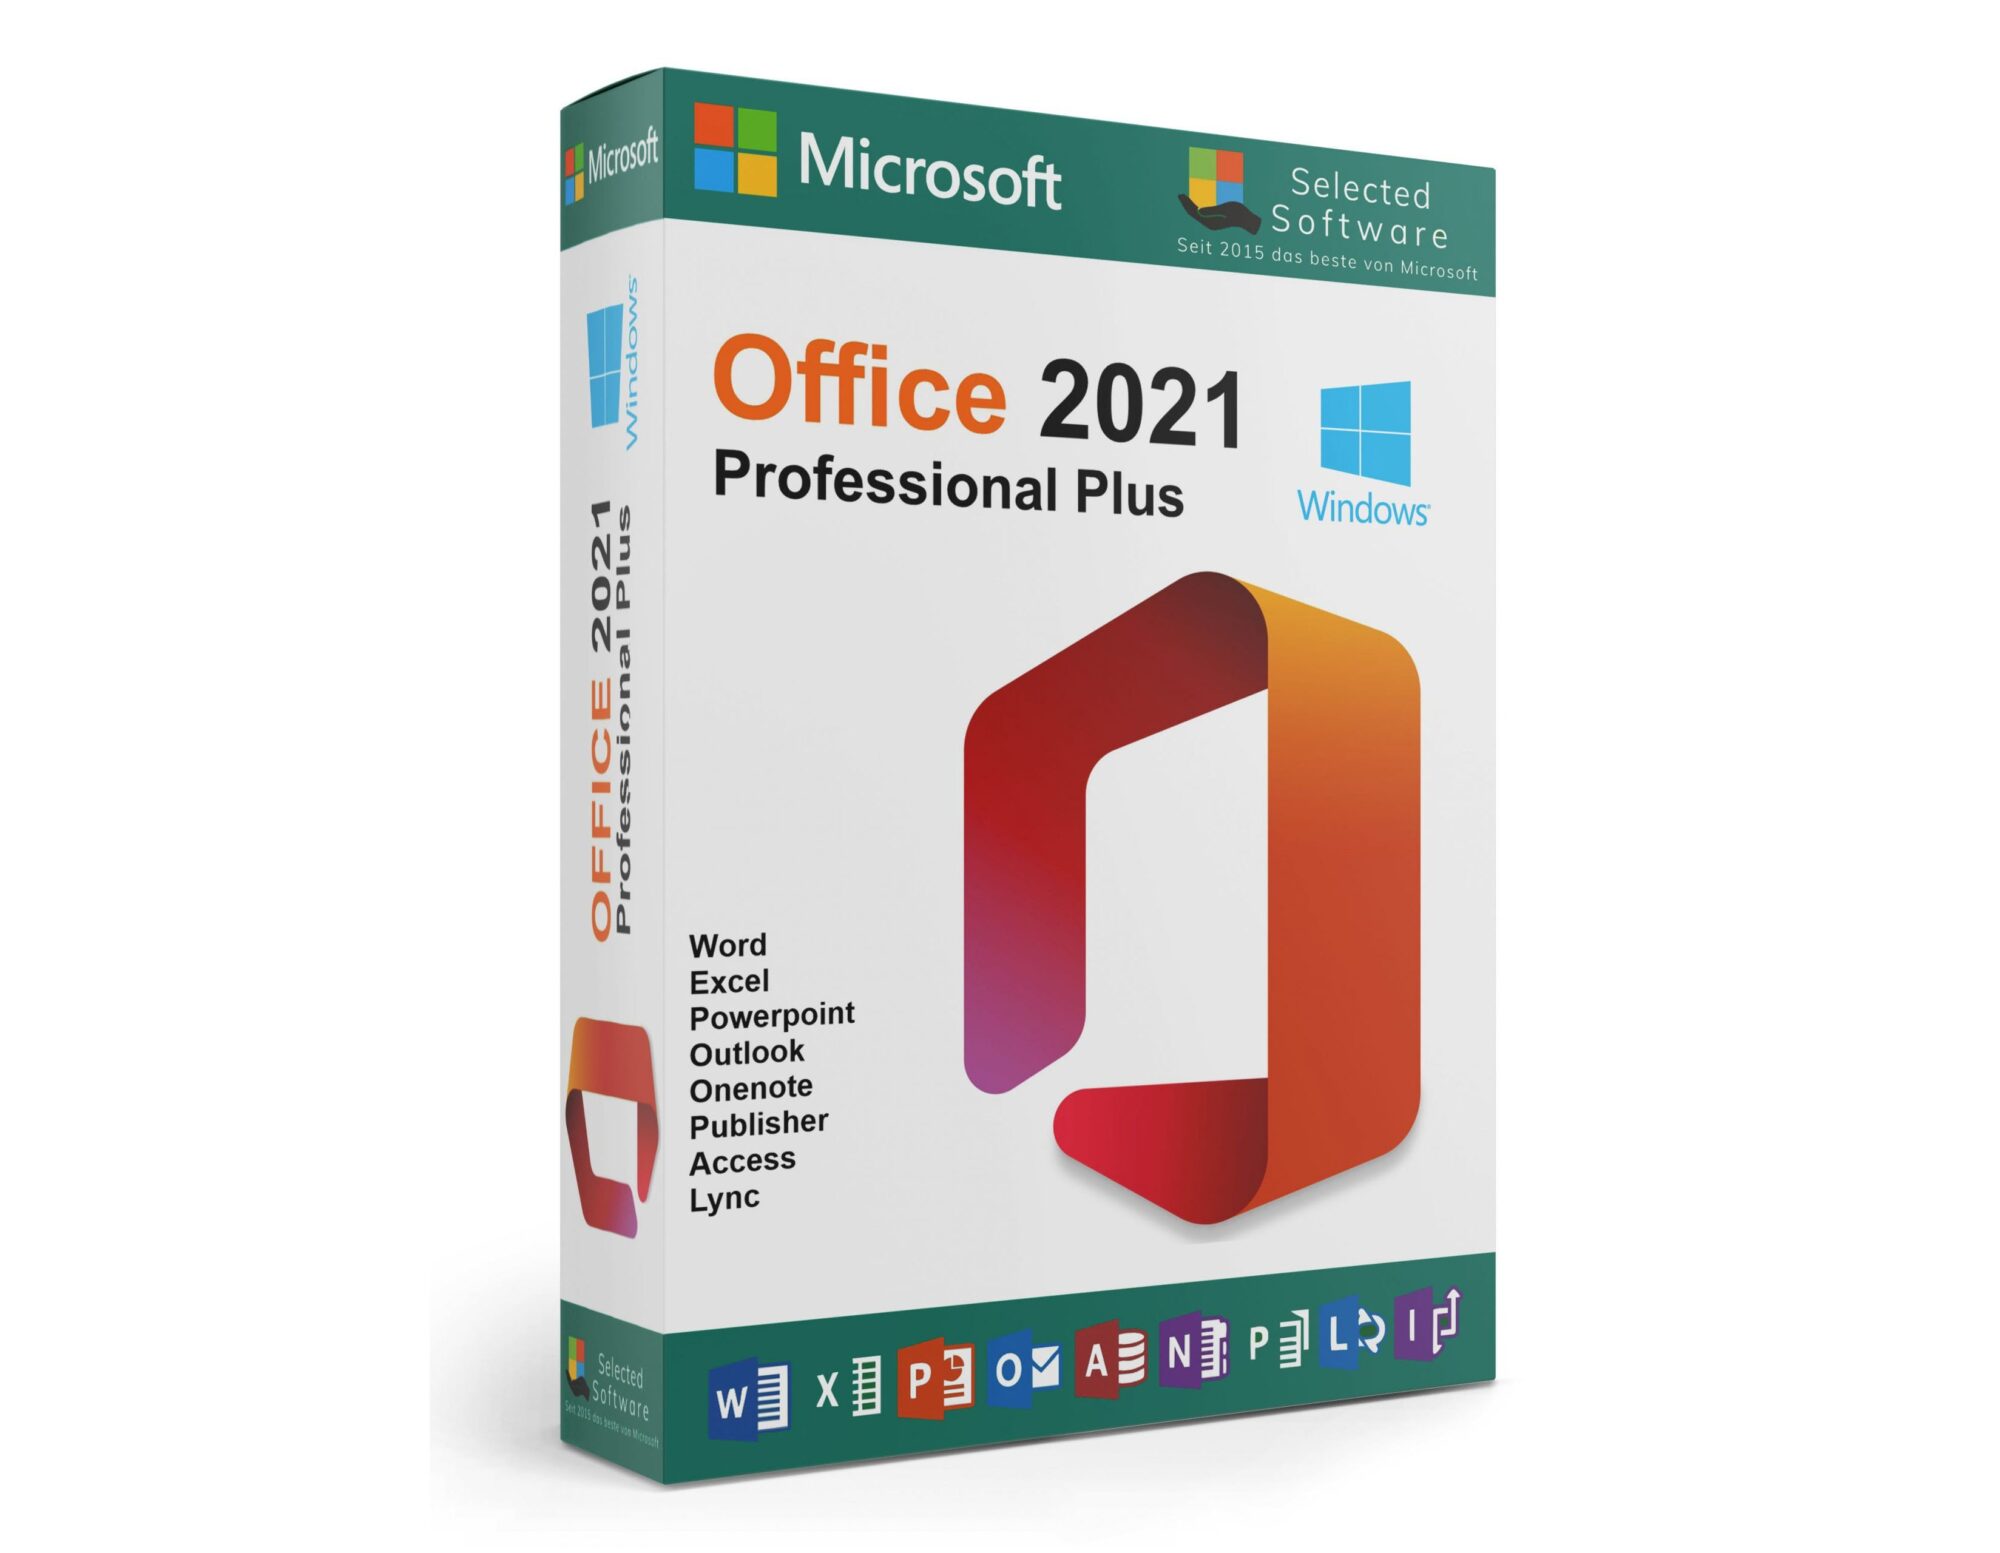 Microsoft Office Professional Plus 2021 VL Version 2304 (Build 16327.20308) Multilingual